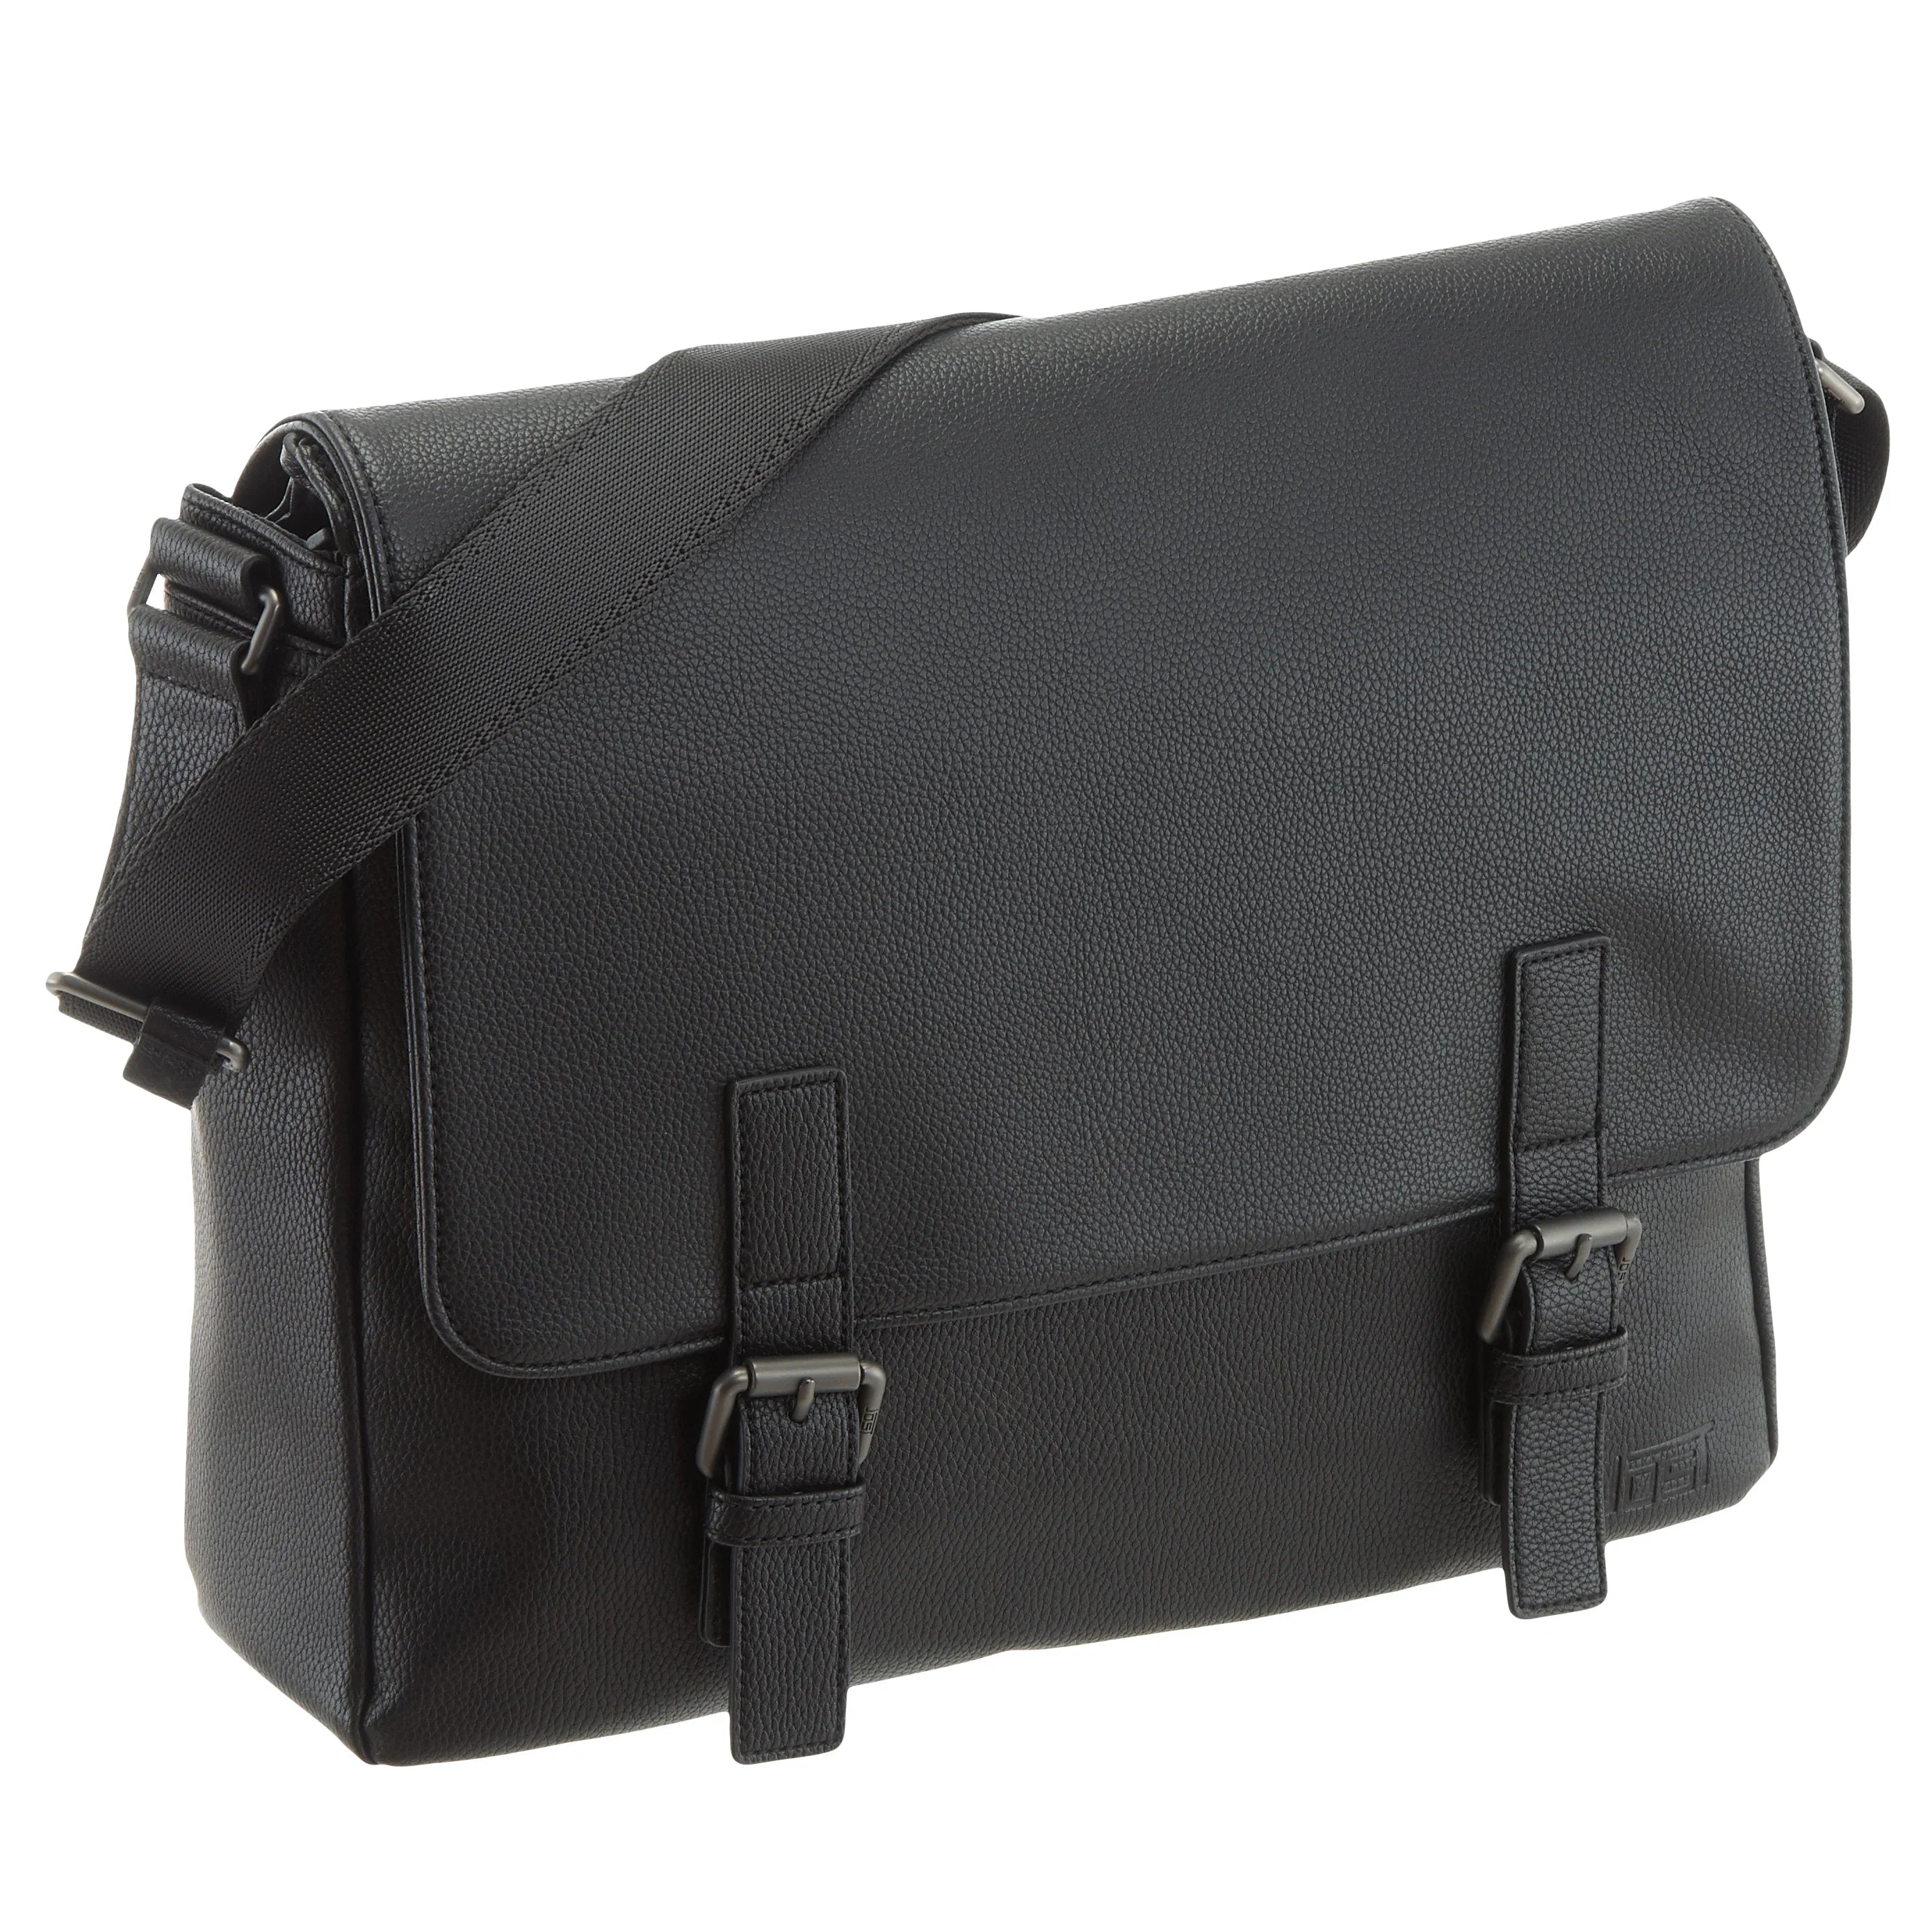 Jost Bodo II shoulder bag 38 cm - black